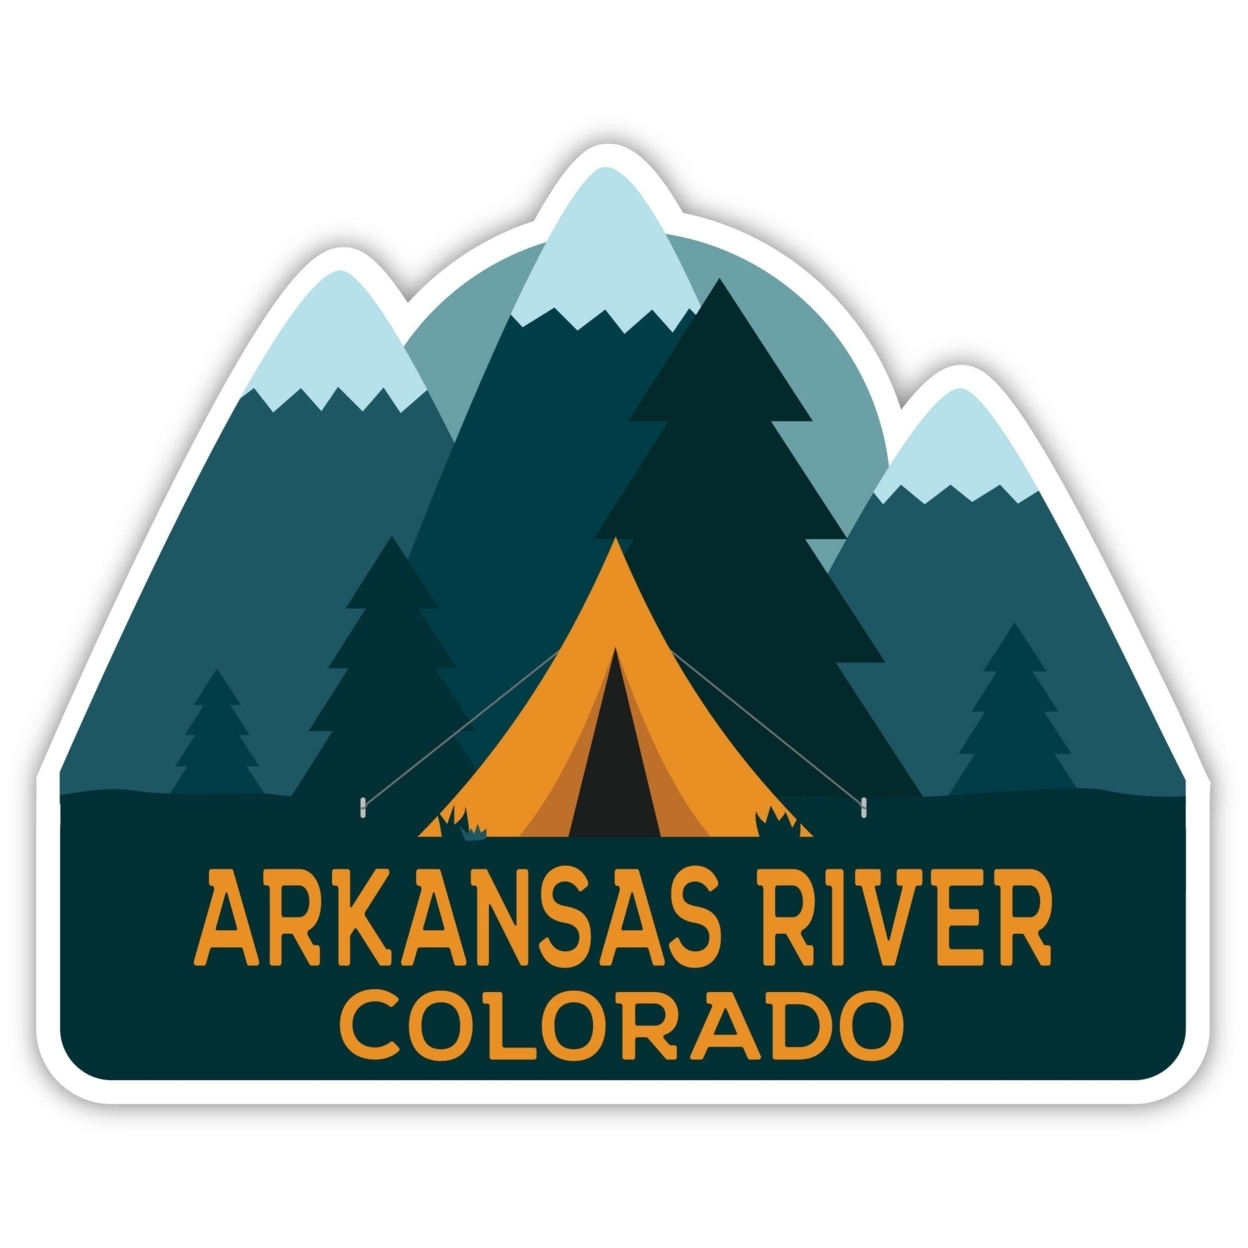 Arkansas River Colorado Souvenir Decorative Stickers (Choose Theme And Size) - 4-Pack, 10-Inch, Tent